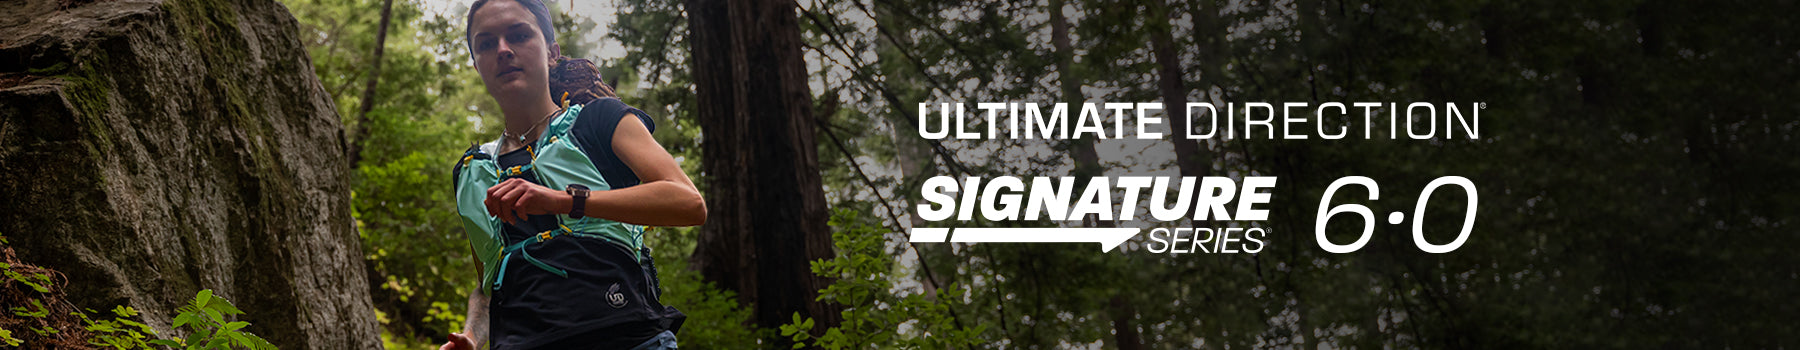 Ultimate Direction Signature 6.0